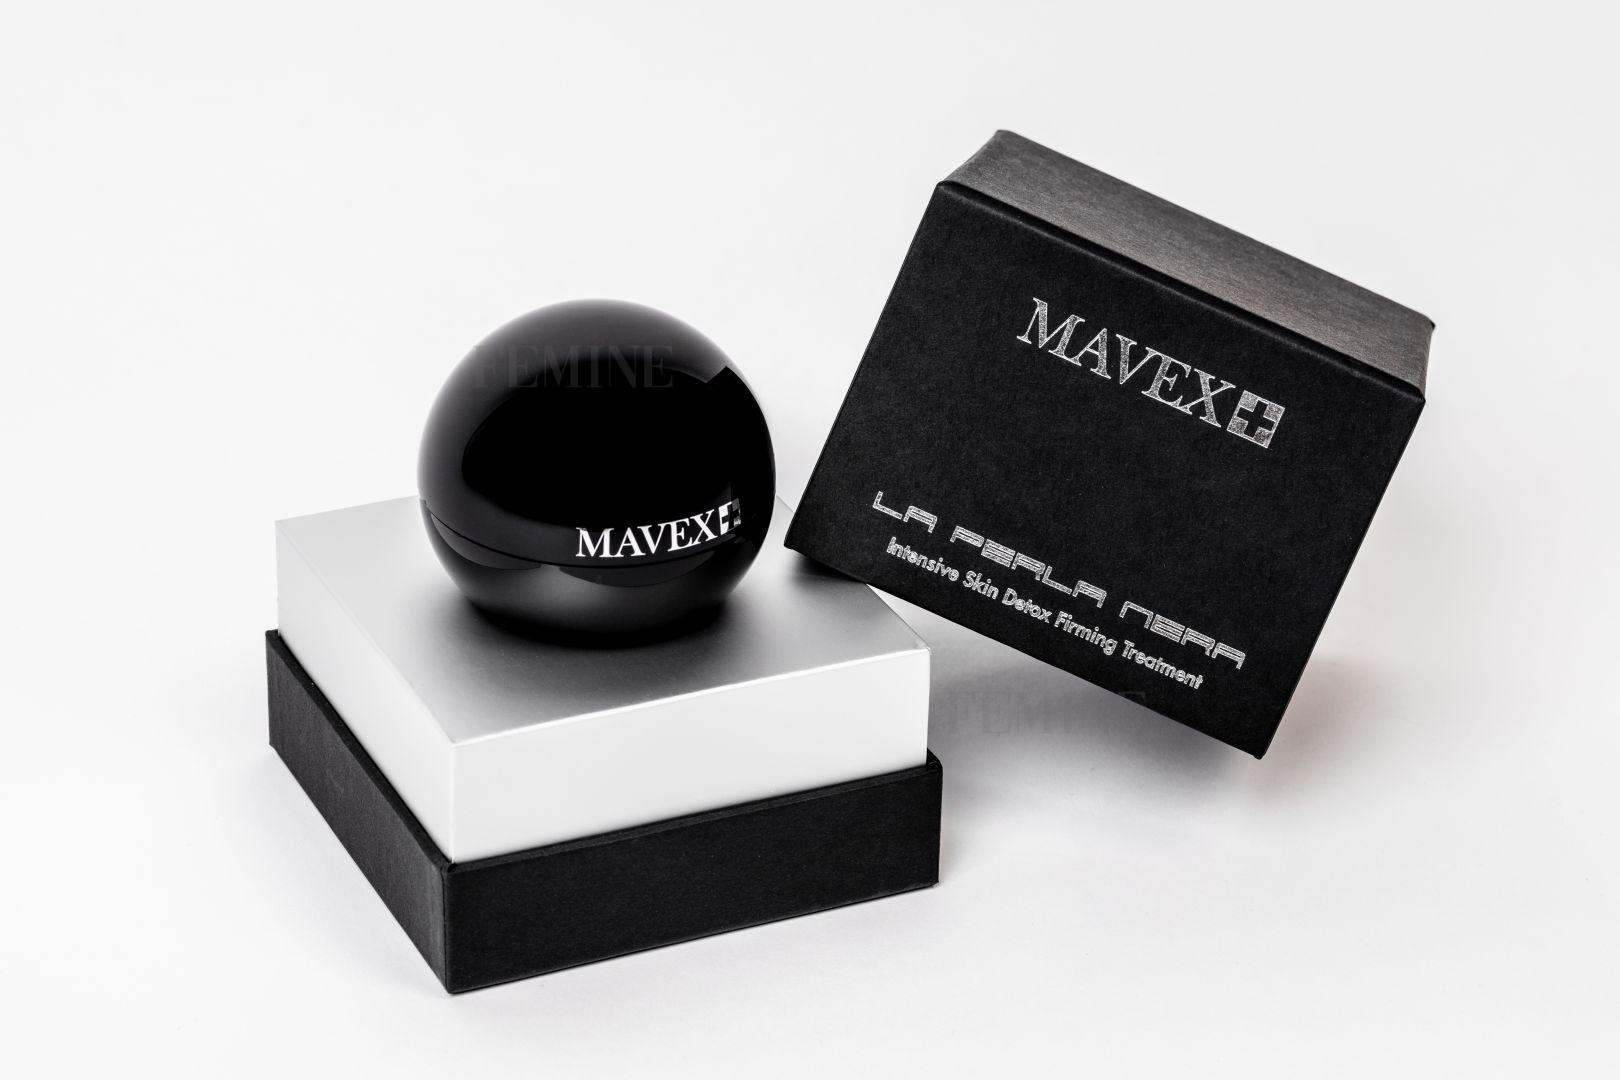 Mavex pleťový krém Intensive Skin Detox Firming Treatment 50ml